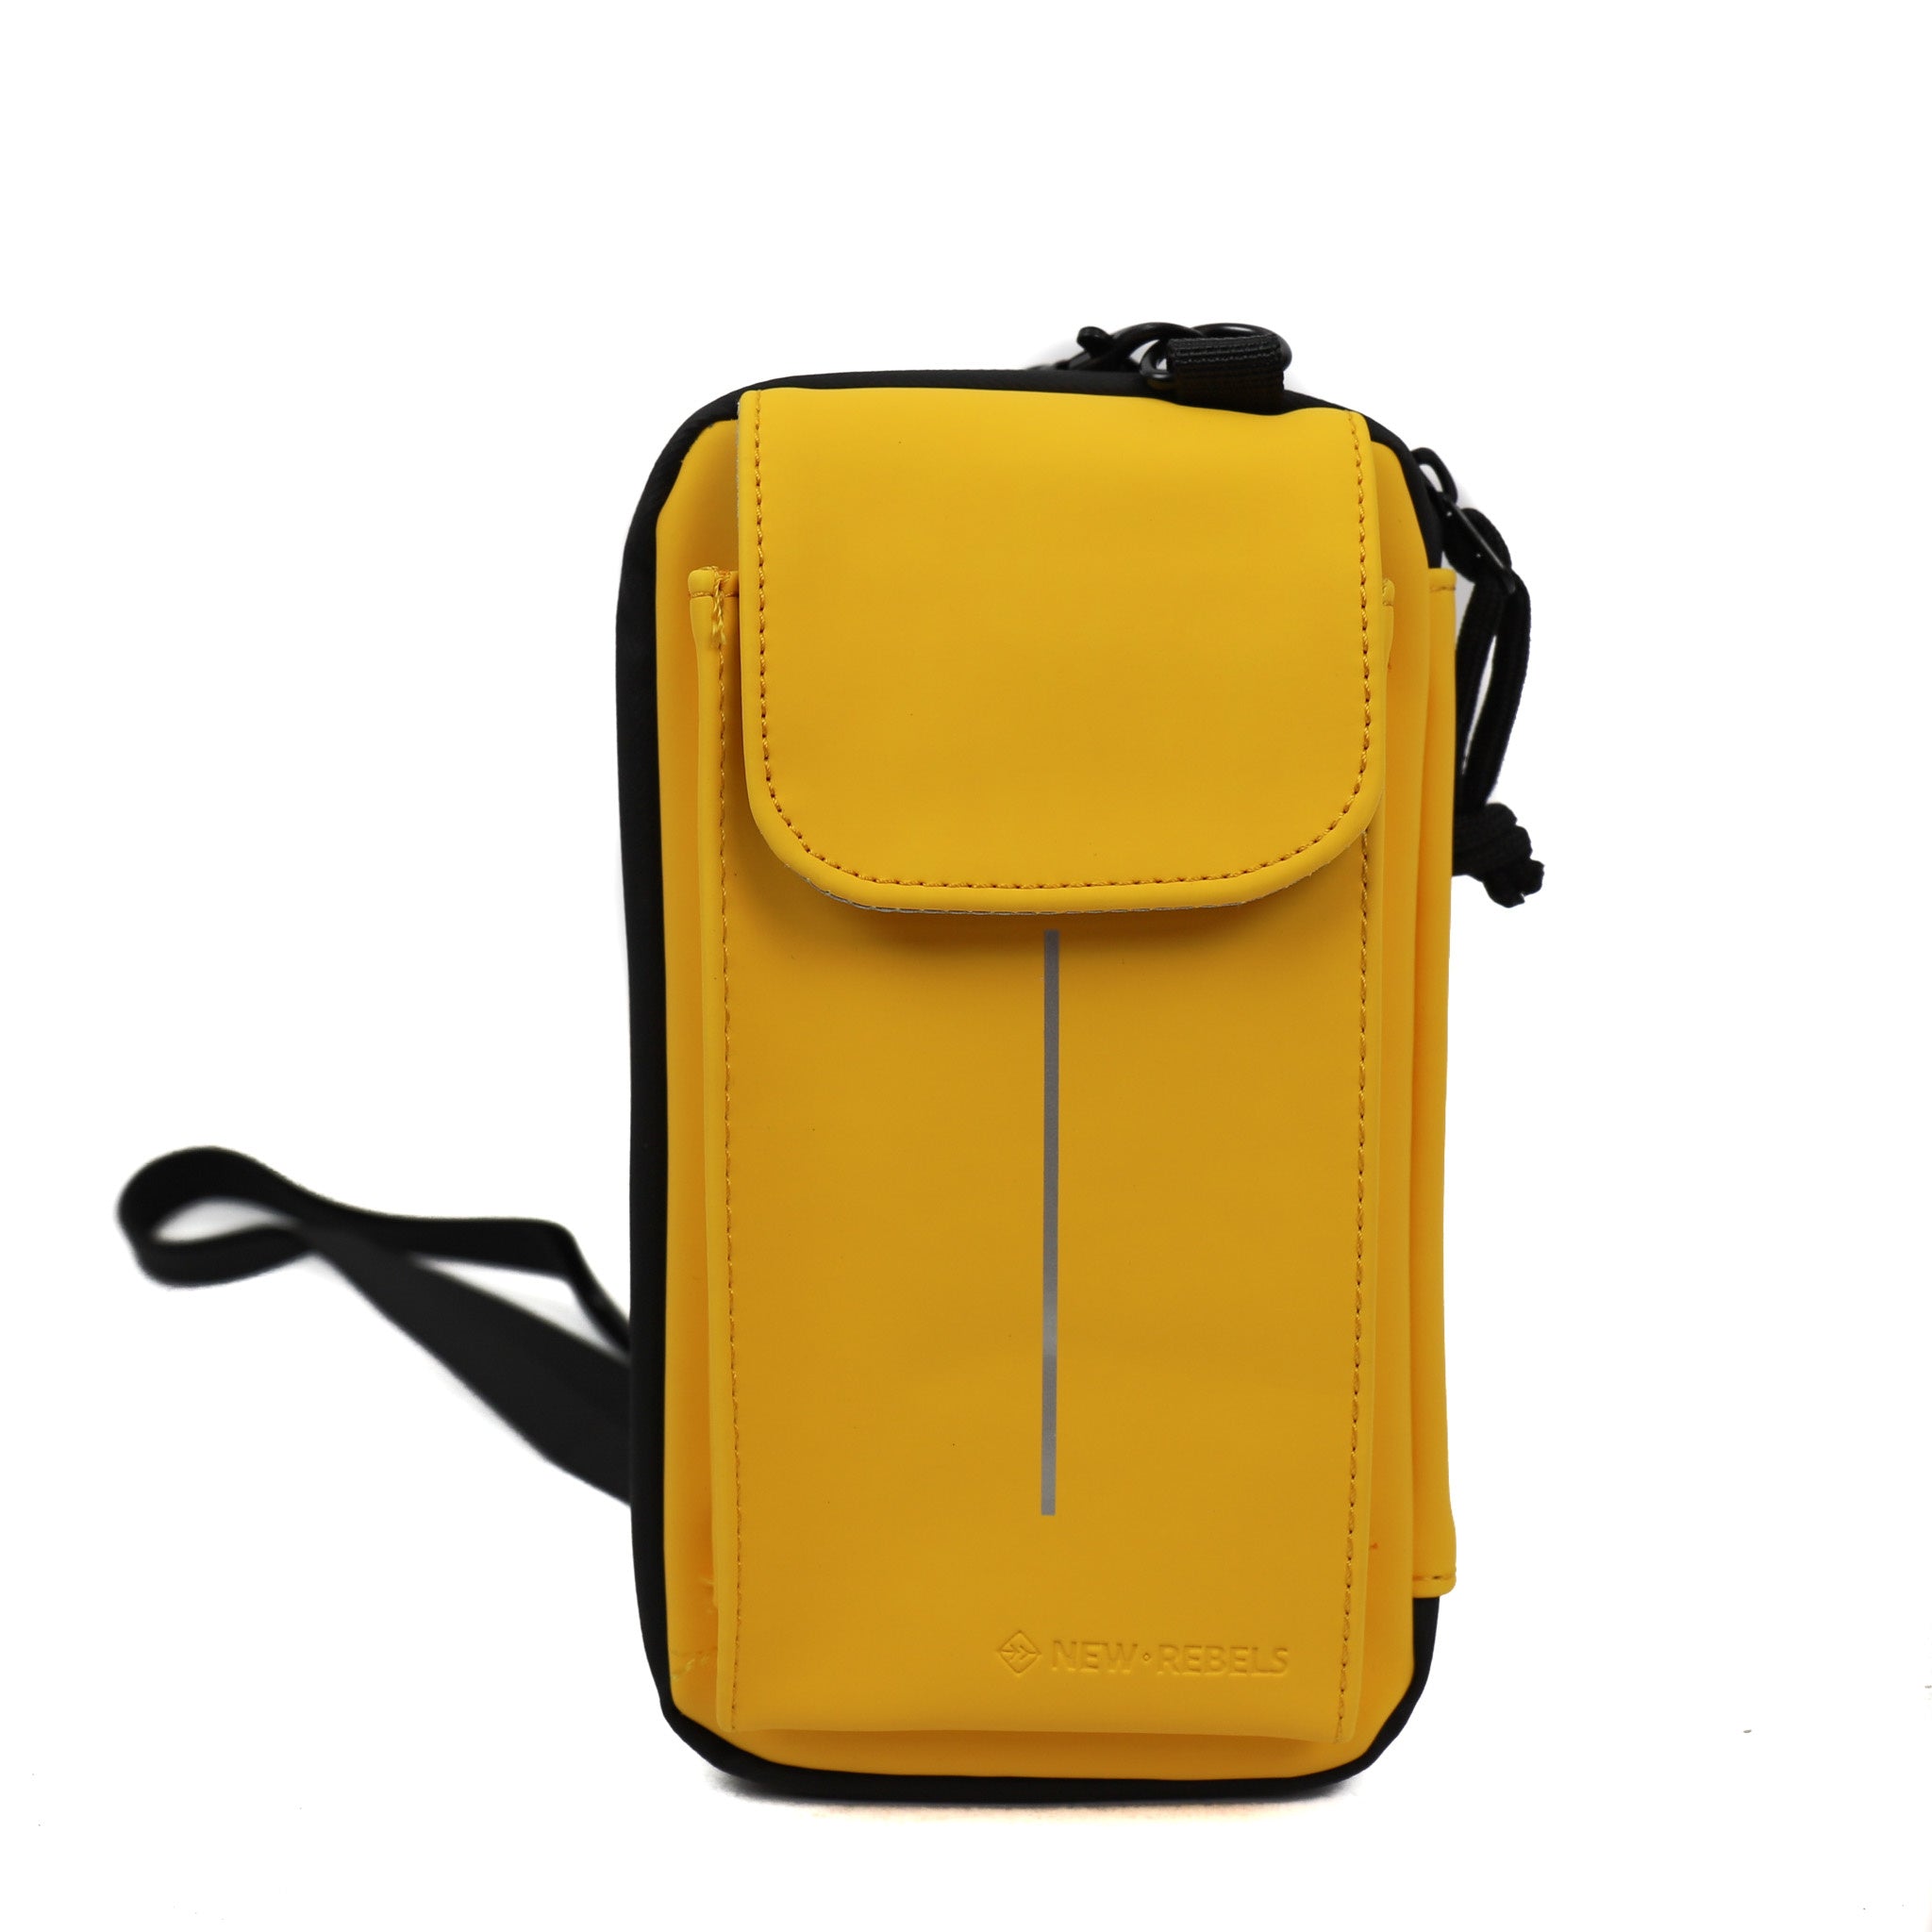 Phone bag 'Mart' yellow